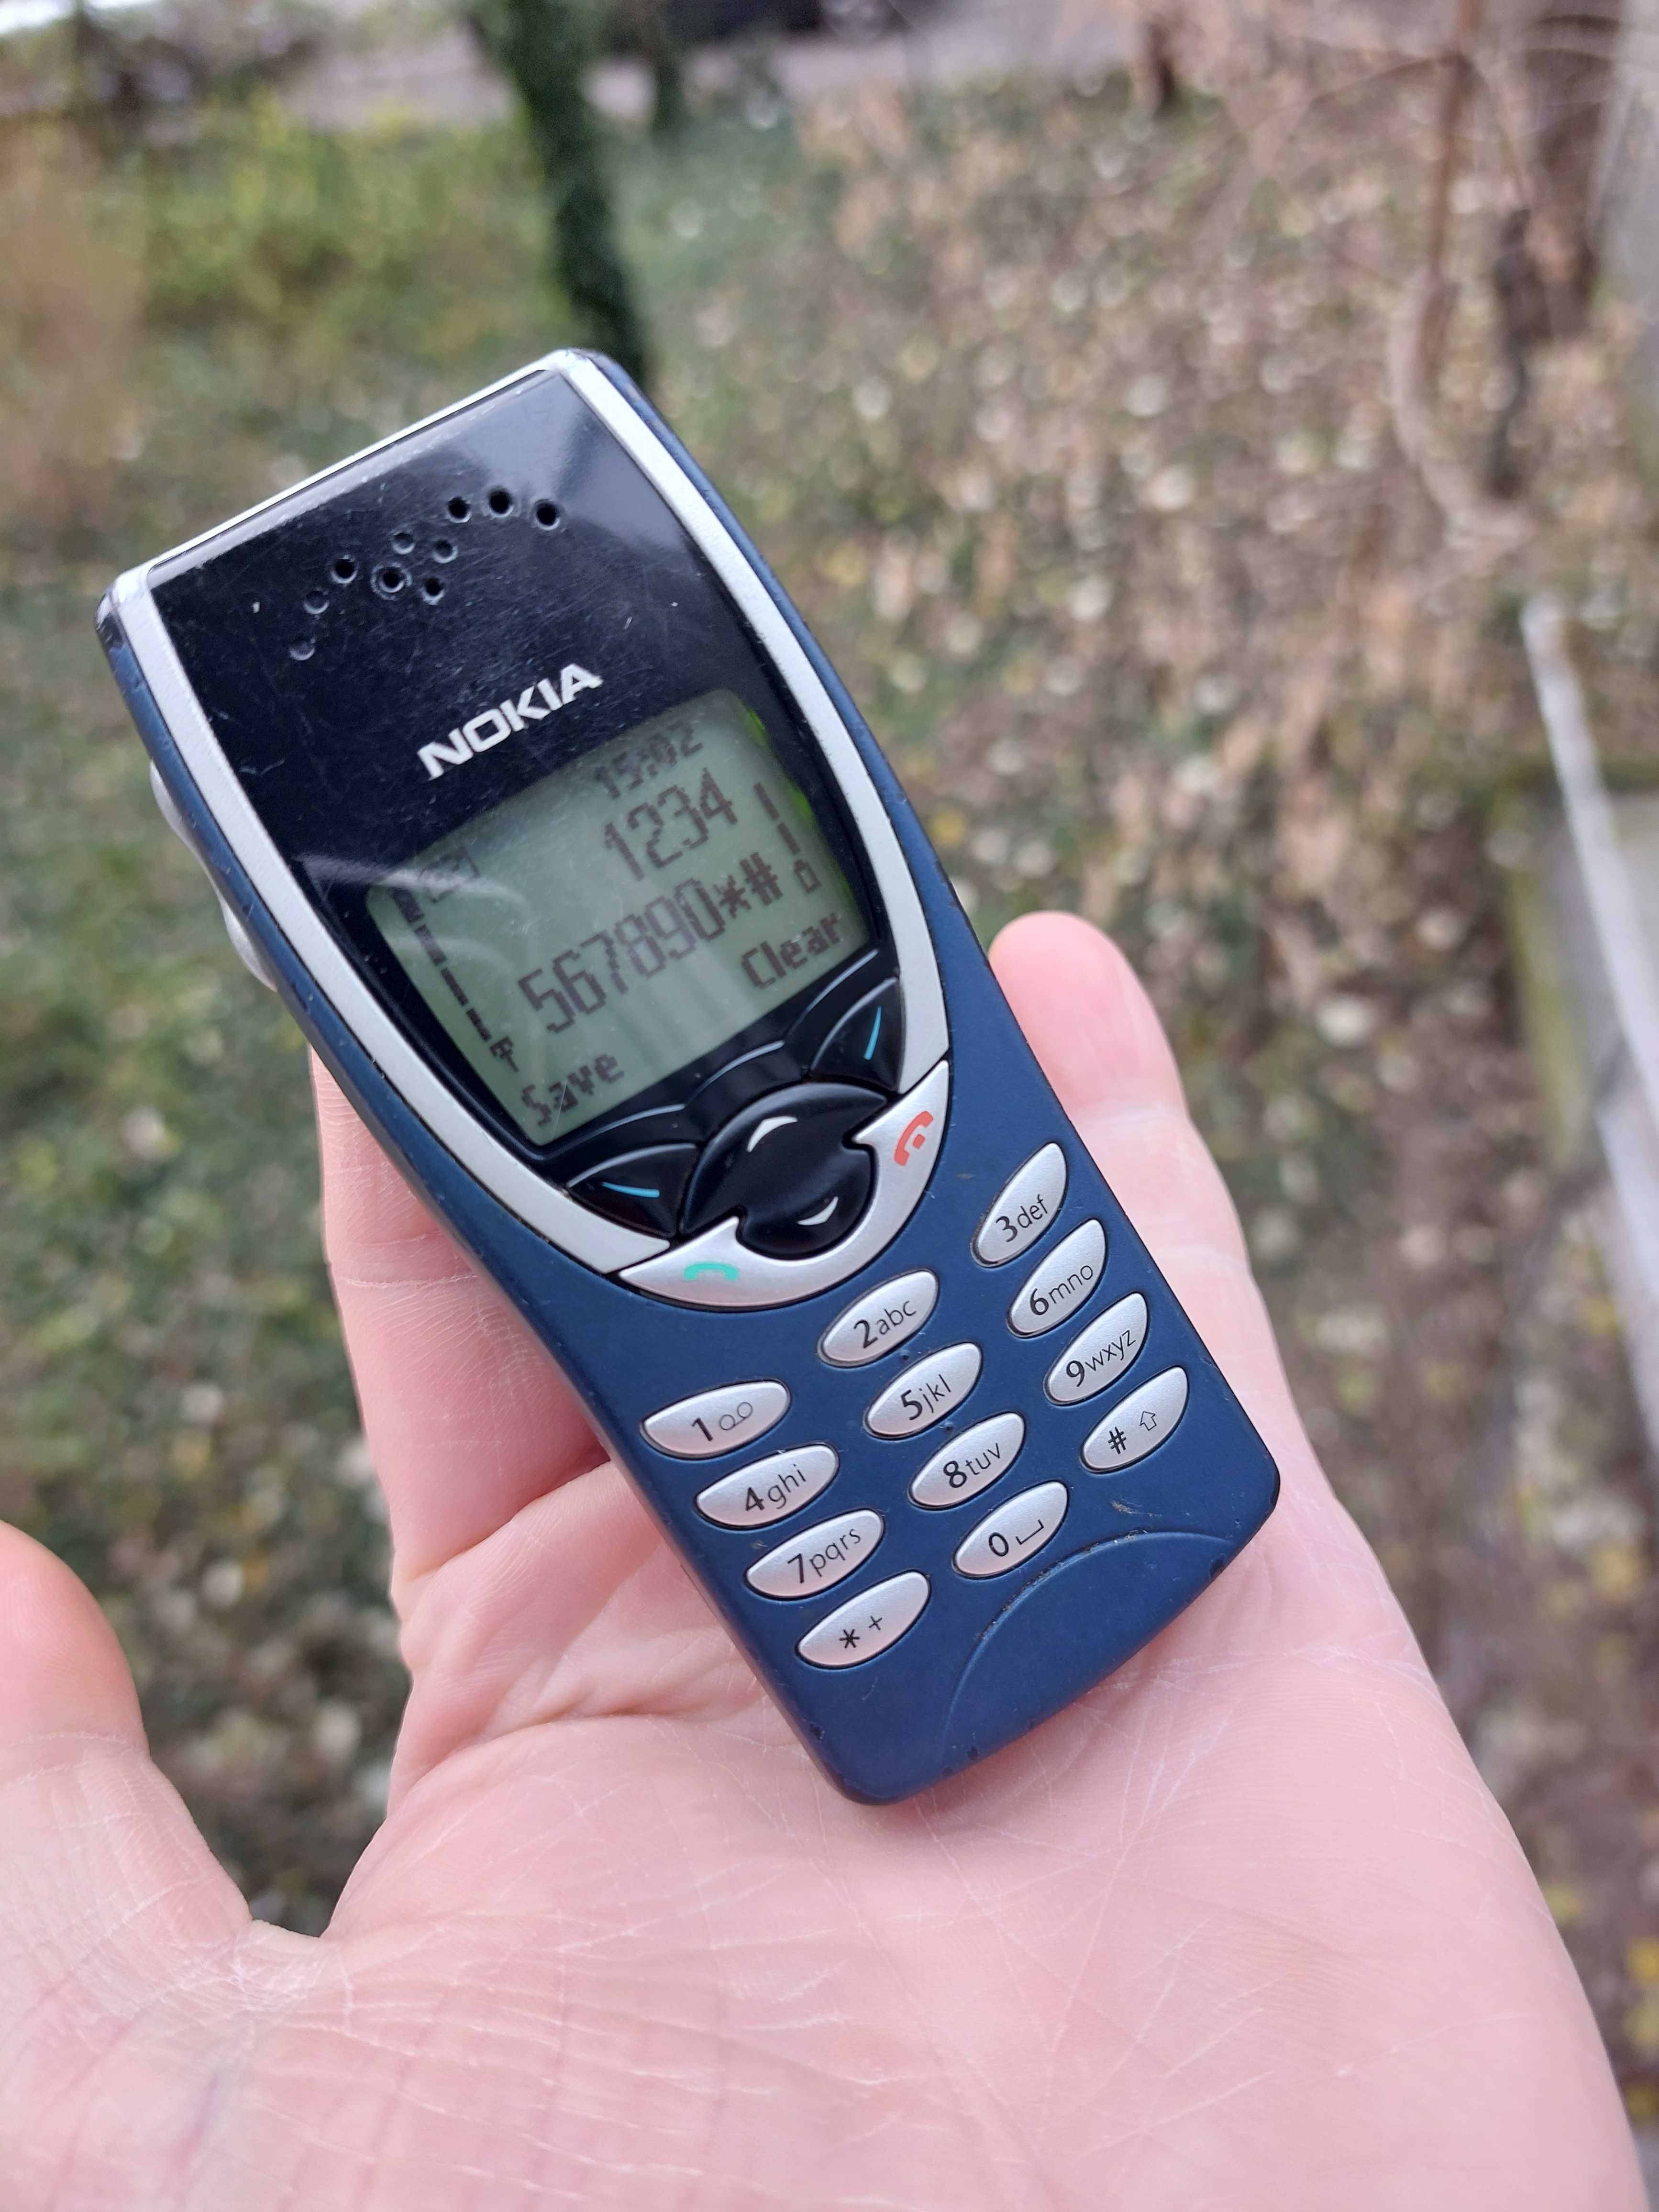 Nokia 8210 orig Finlanda decodat stare f buna functionare ireprosabila